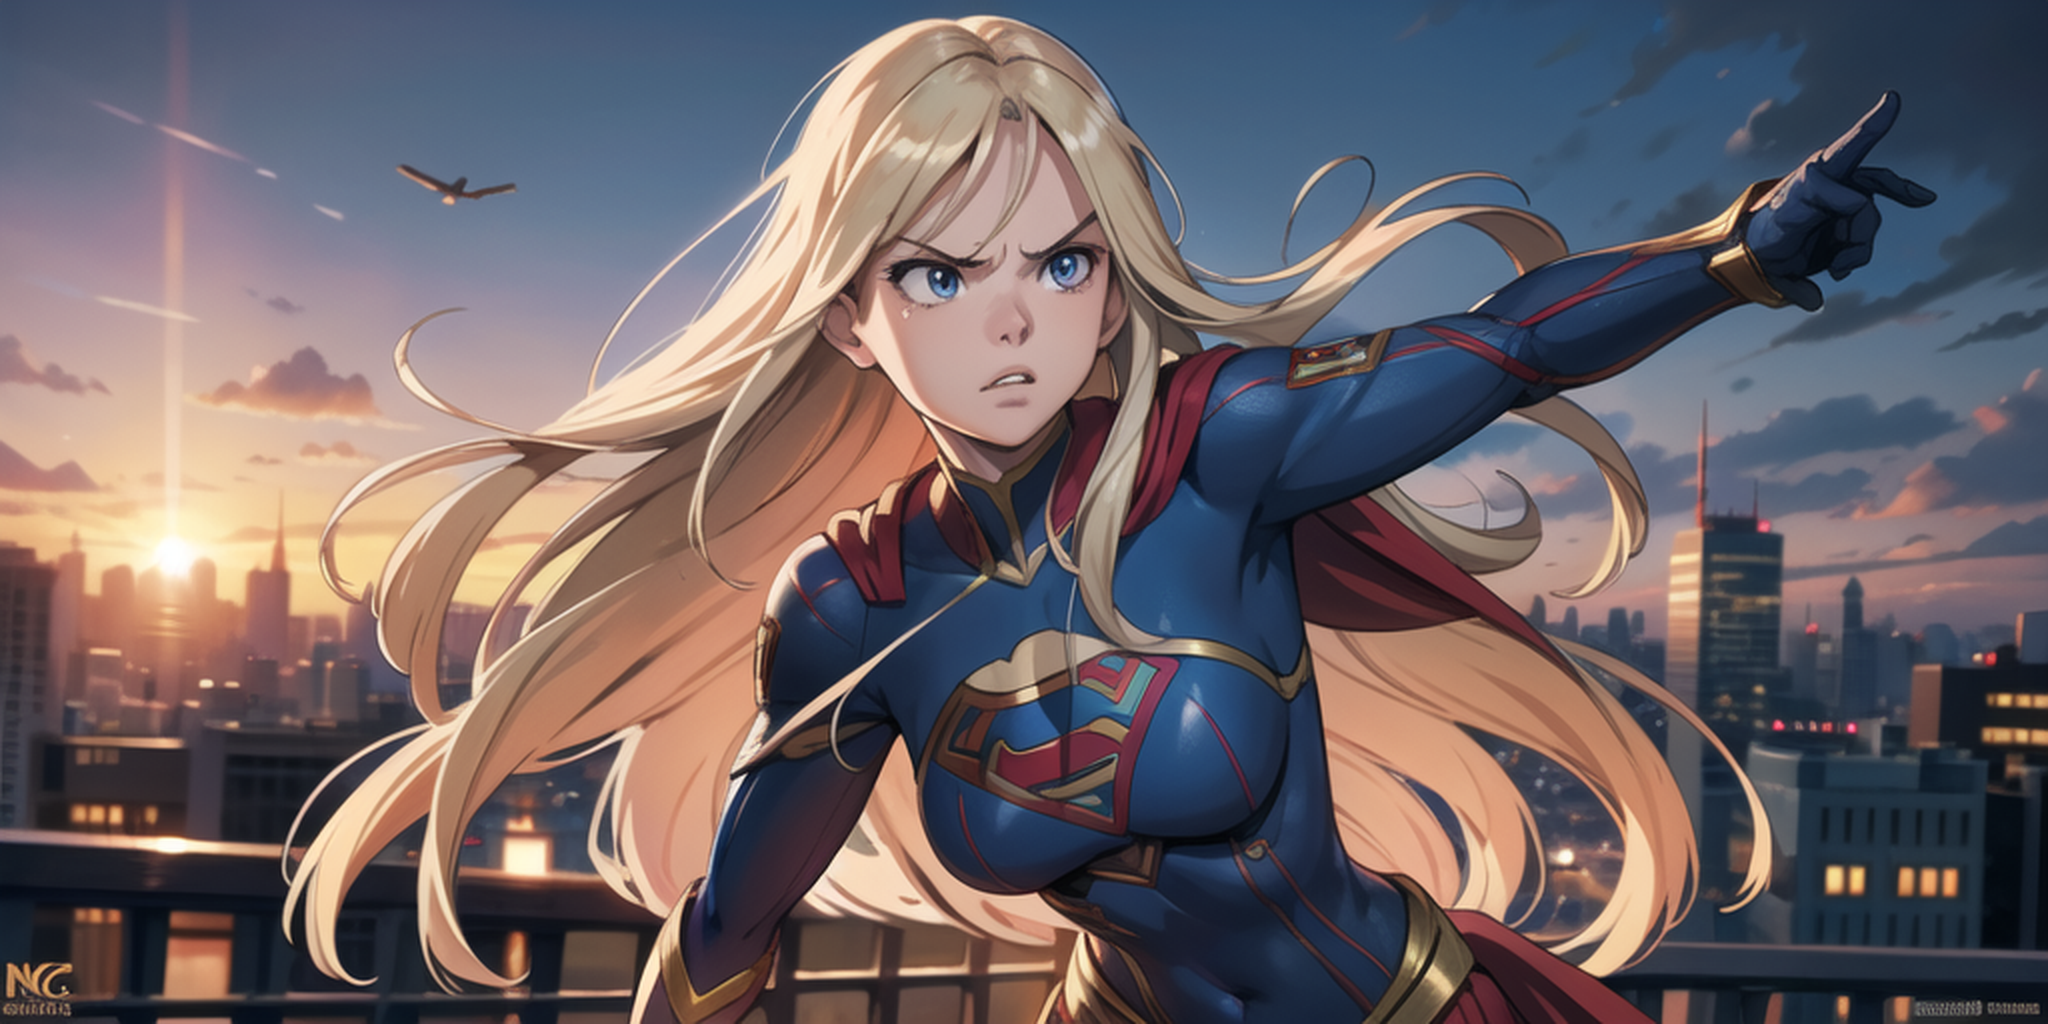 Cute Anime Supergirl by SUPERGIRLFANATIC99 on DeviantArt